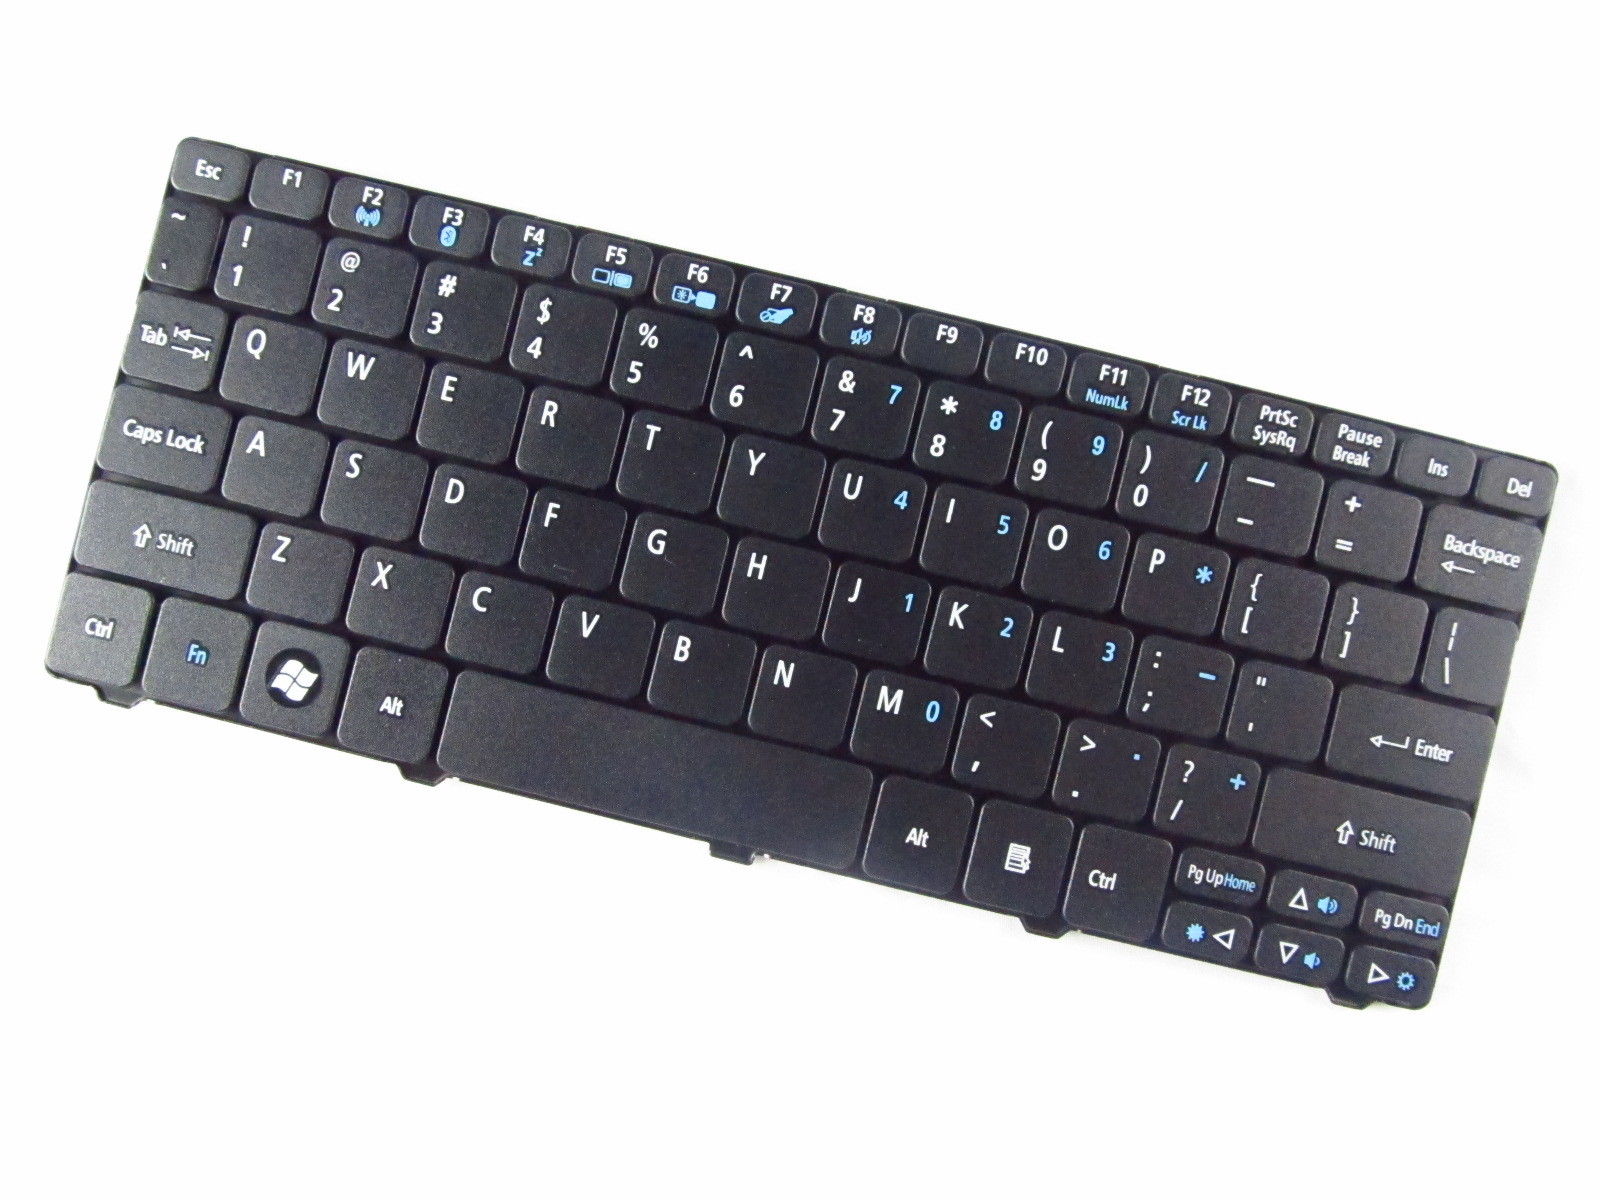 Acer Laptop Keyboard Repair/replacement in chennai